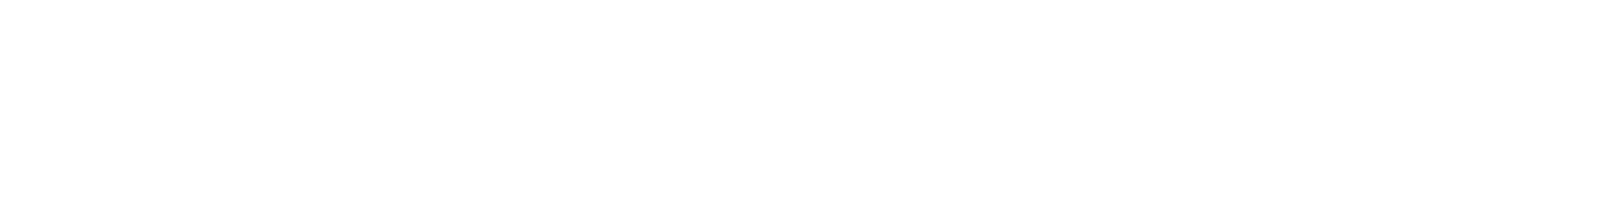 Burberry Logo groß für dunkle Hintergründe (transparentes PNG)